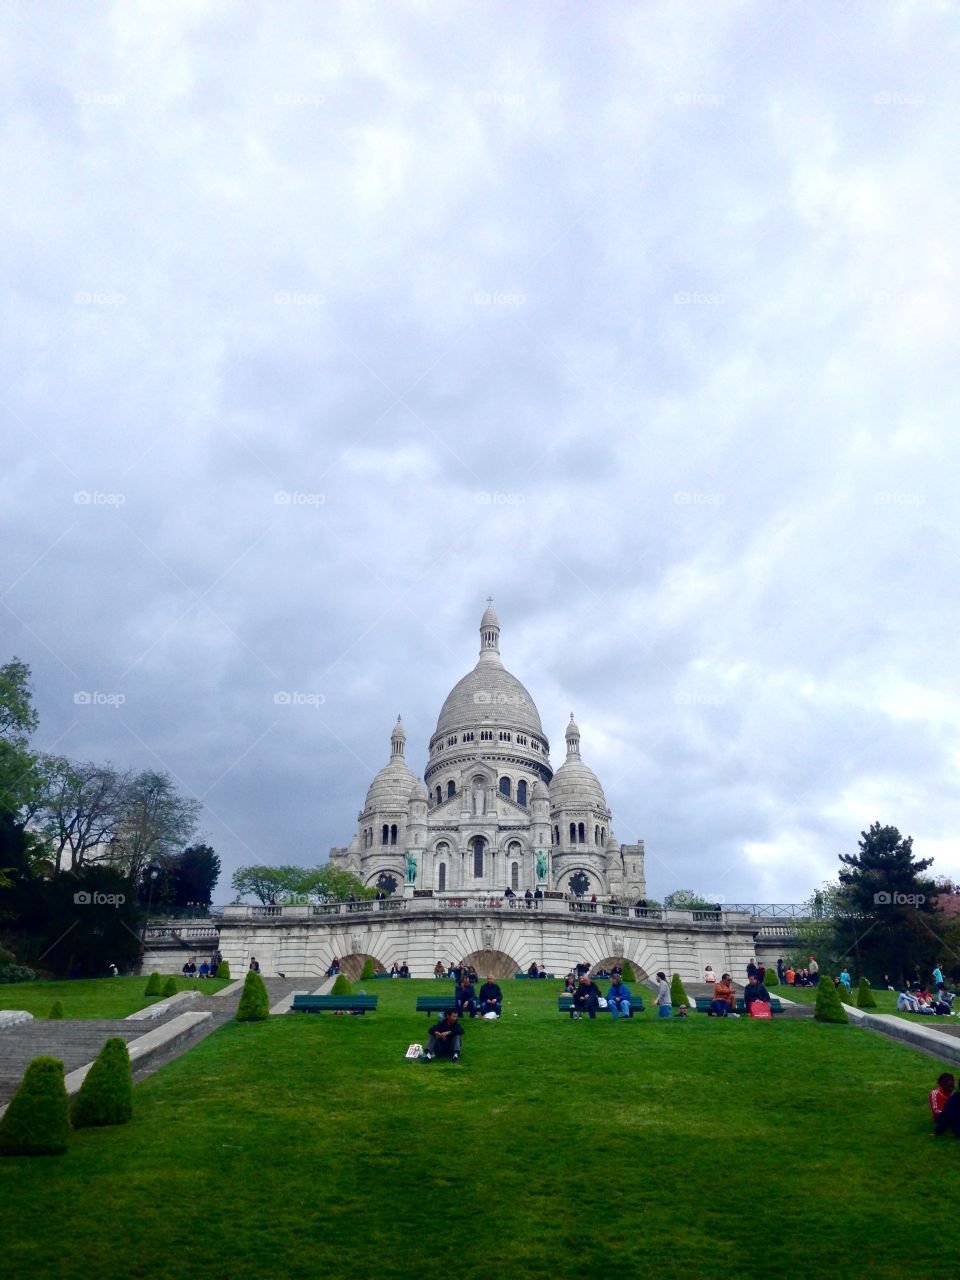 The Sacre Coeur in Paris. The Sacre Coeur in Montmartre, Paris